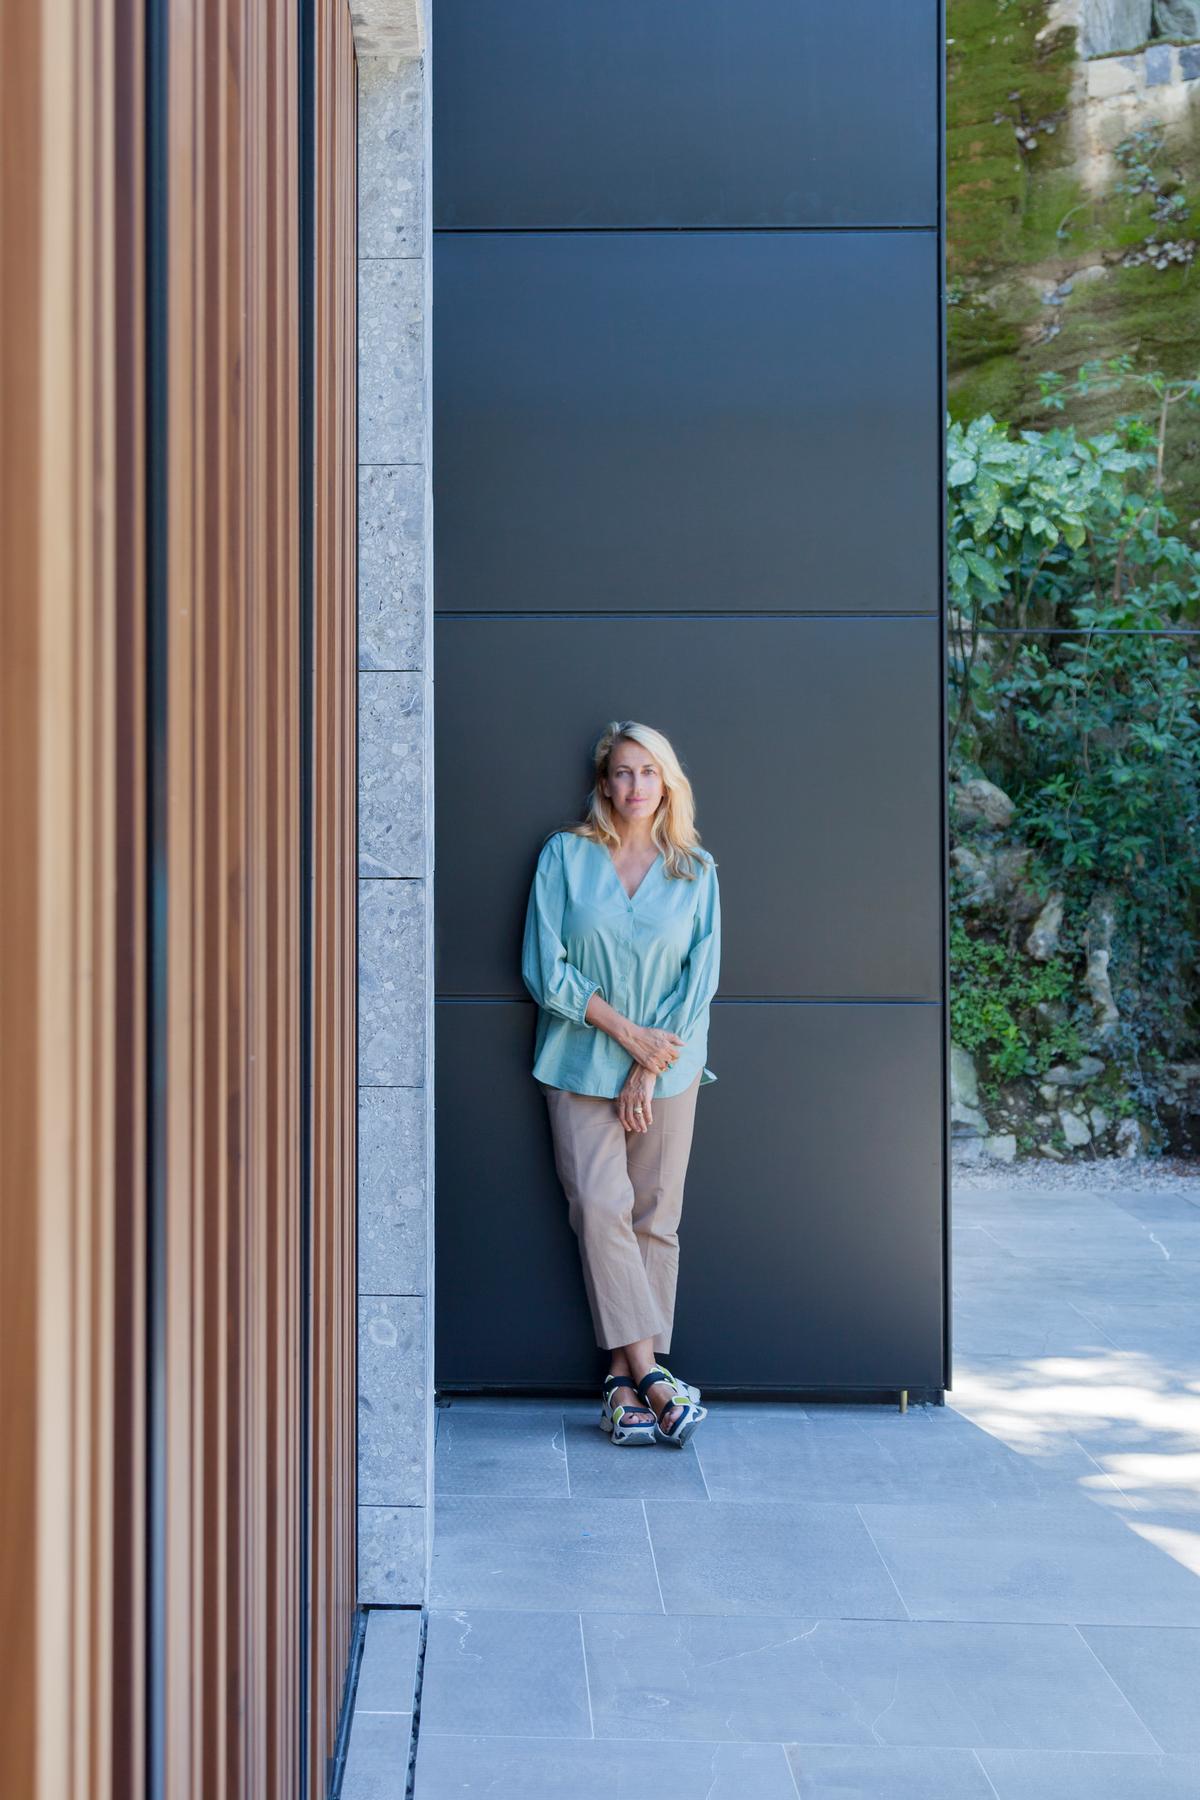 Patricia Urquiola's intimate and contemporary Sereno hotel opens on Lake  Como, Architecture and design news